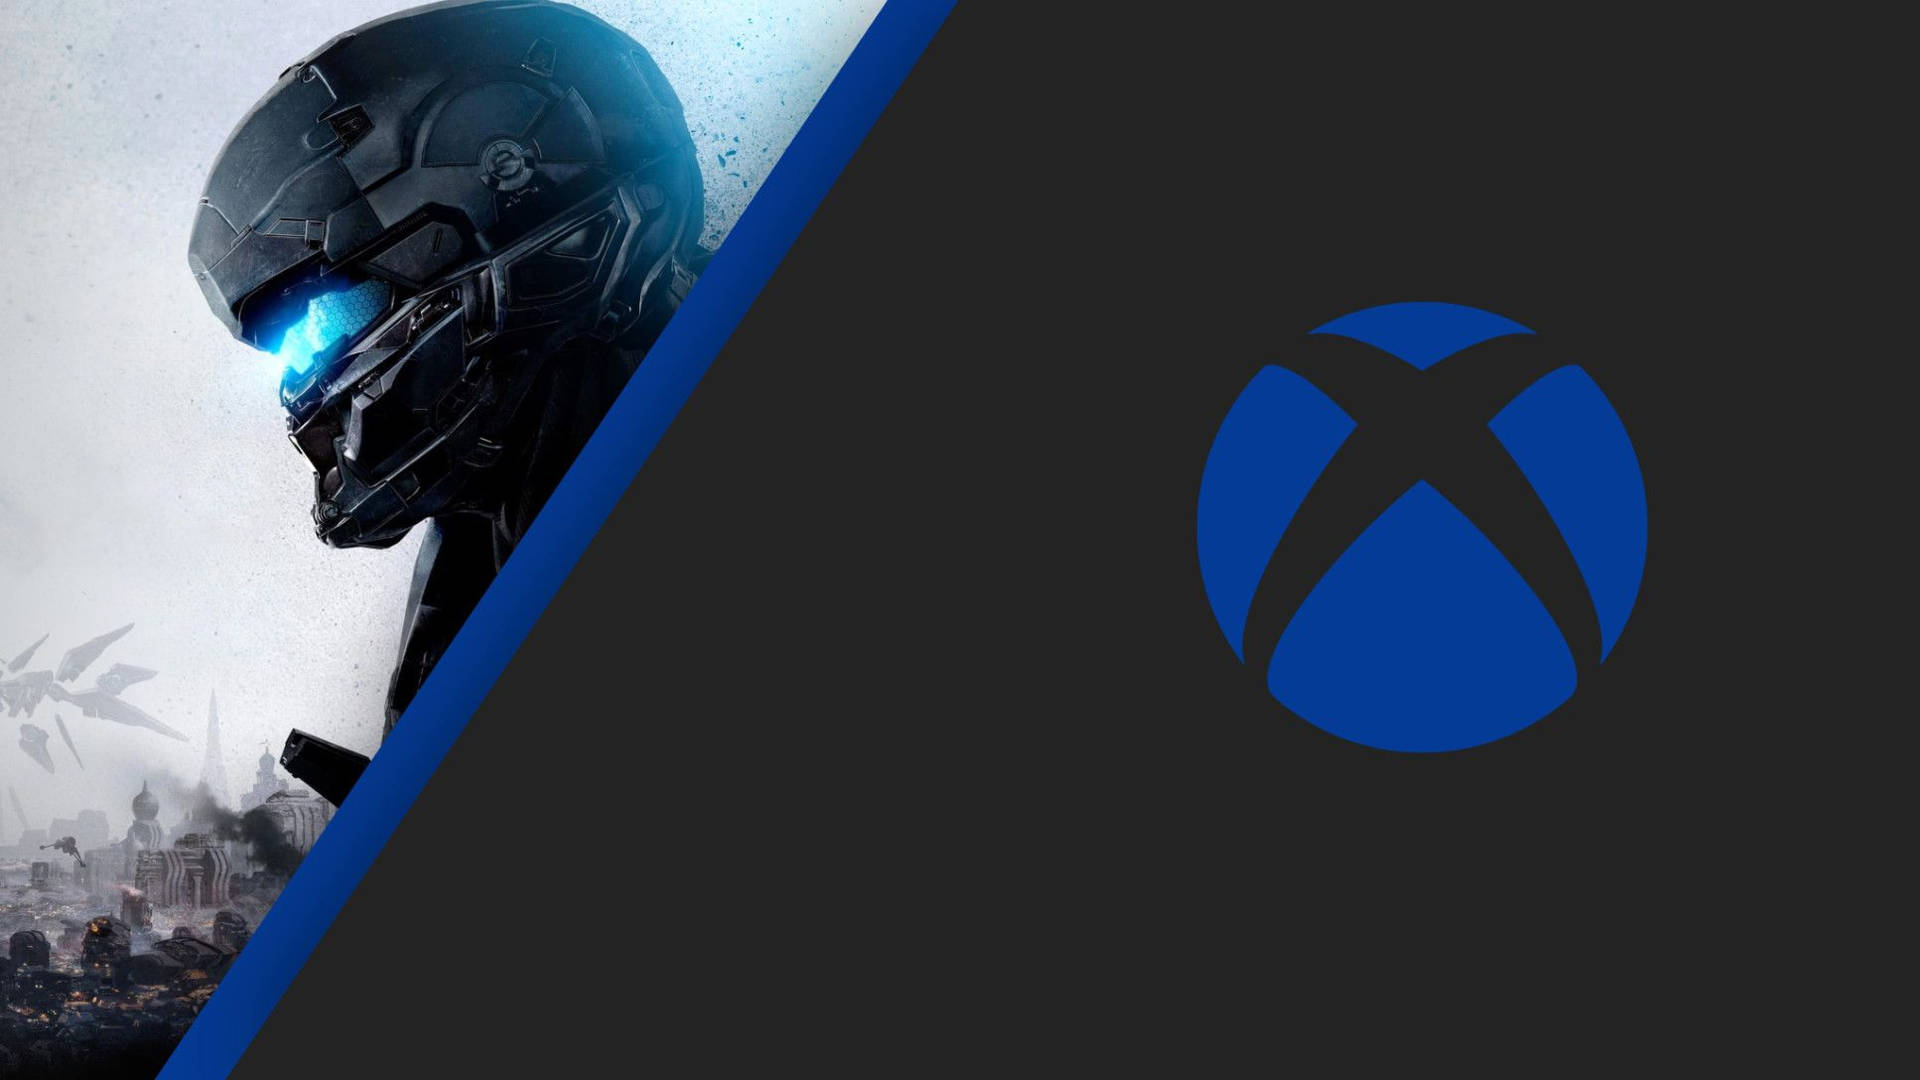 Xboxone X Halo 5 Guardians: Xbox One X Halo 5 Guardians Wallpaper